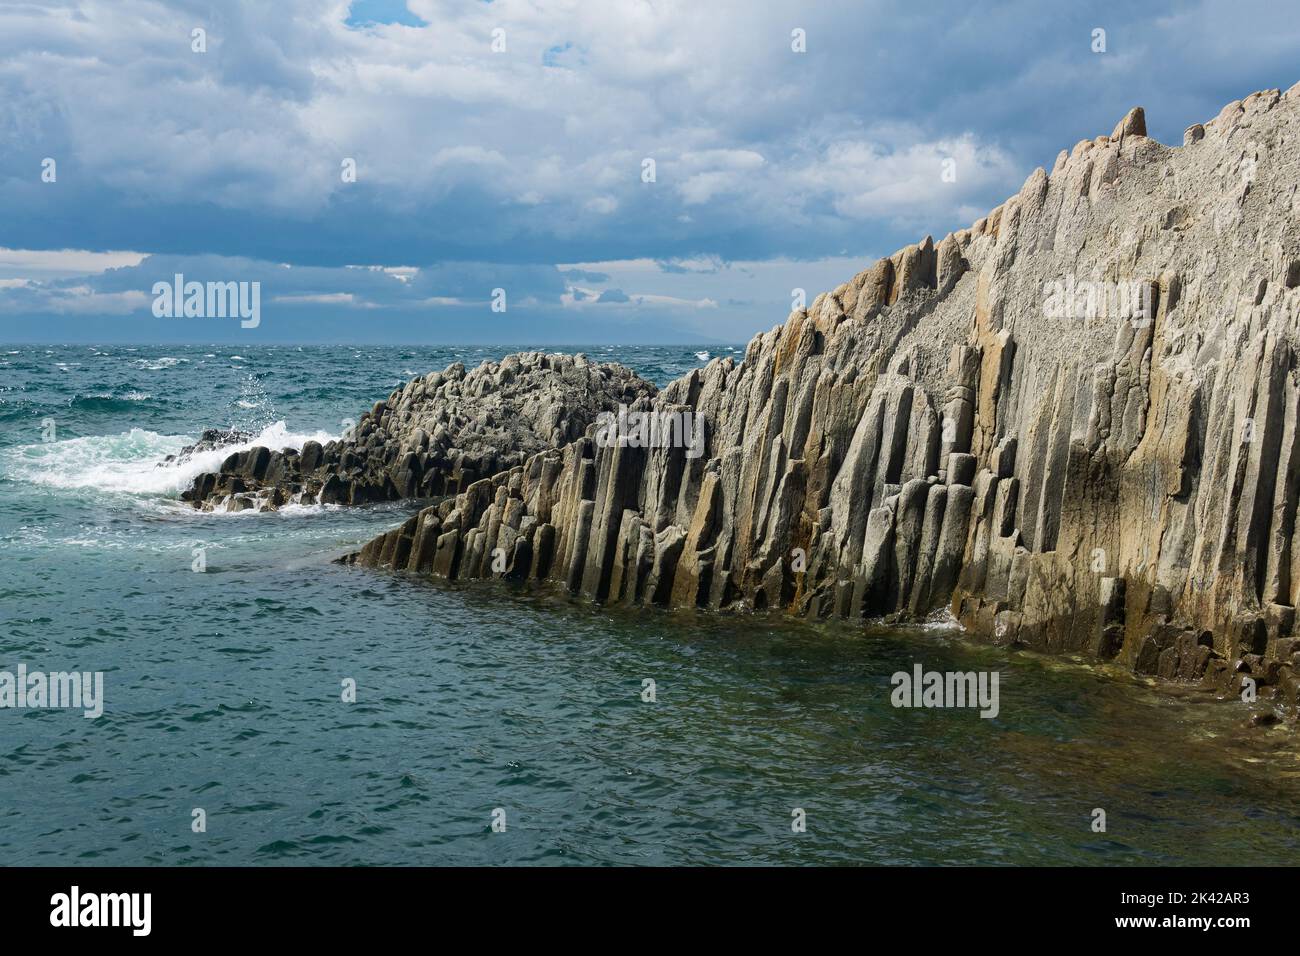 rocky seashore formed by columnar basalt against the surf, coastal landscape of the Kuril Islands Stock Photo